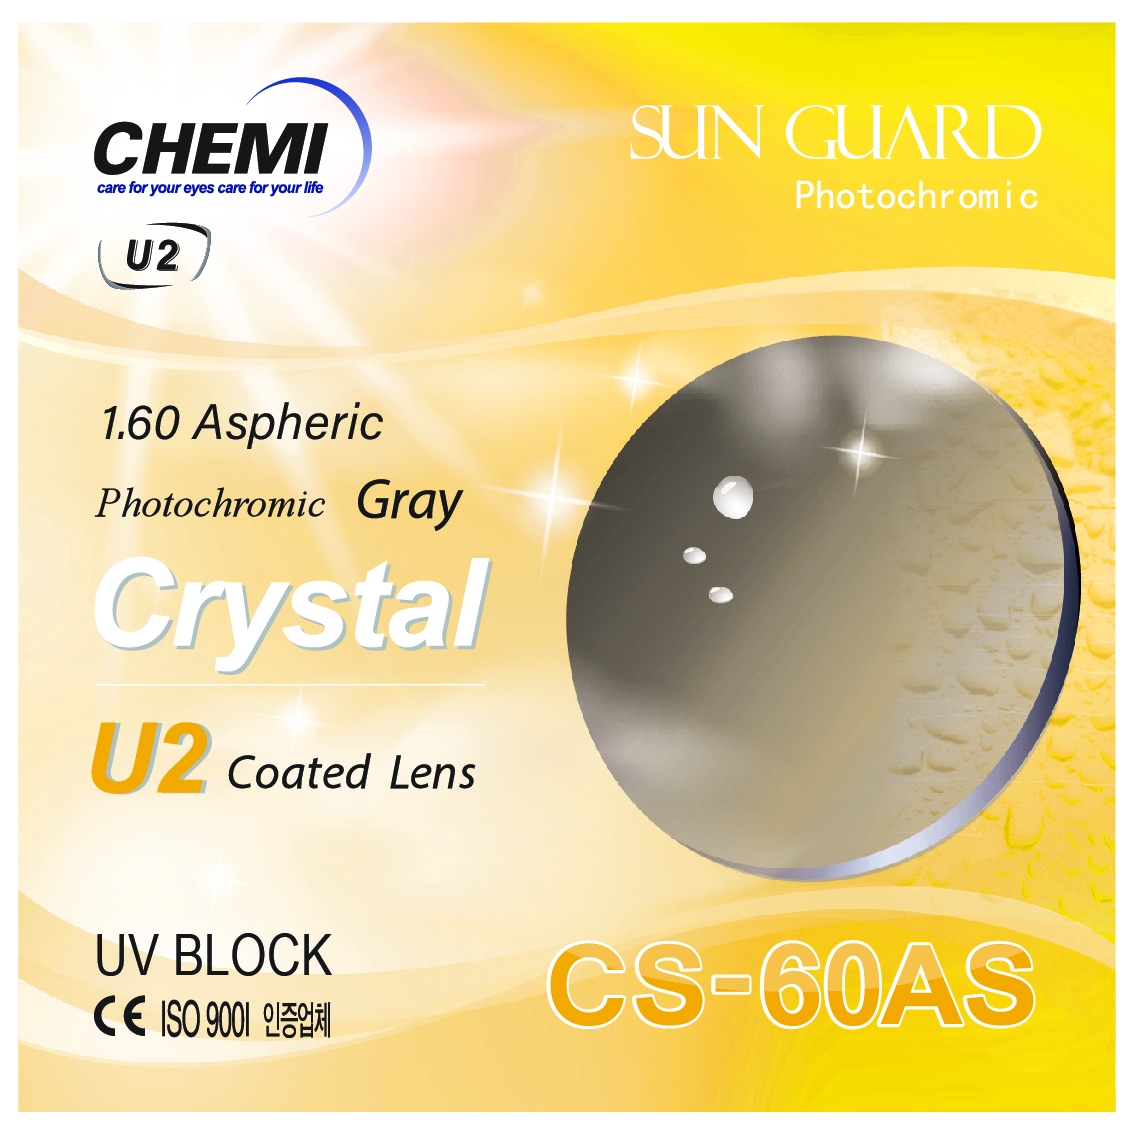 Chemi U2 Crystal 1.56 SP